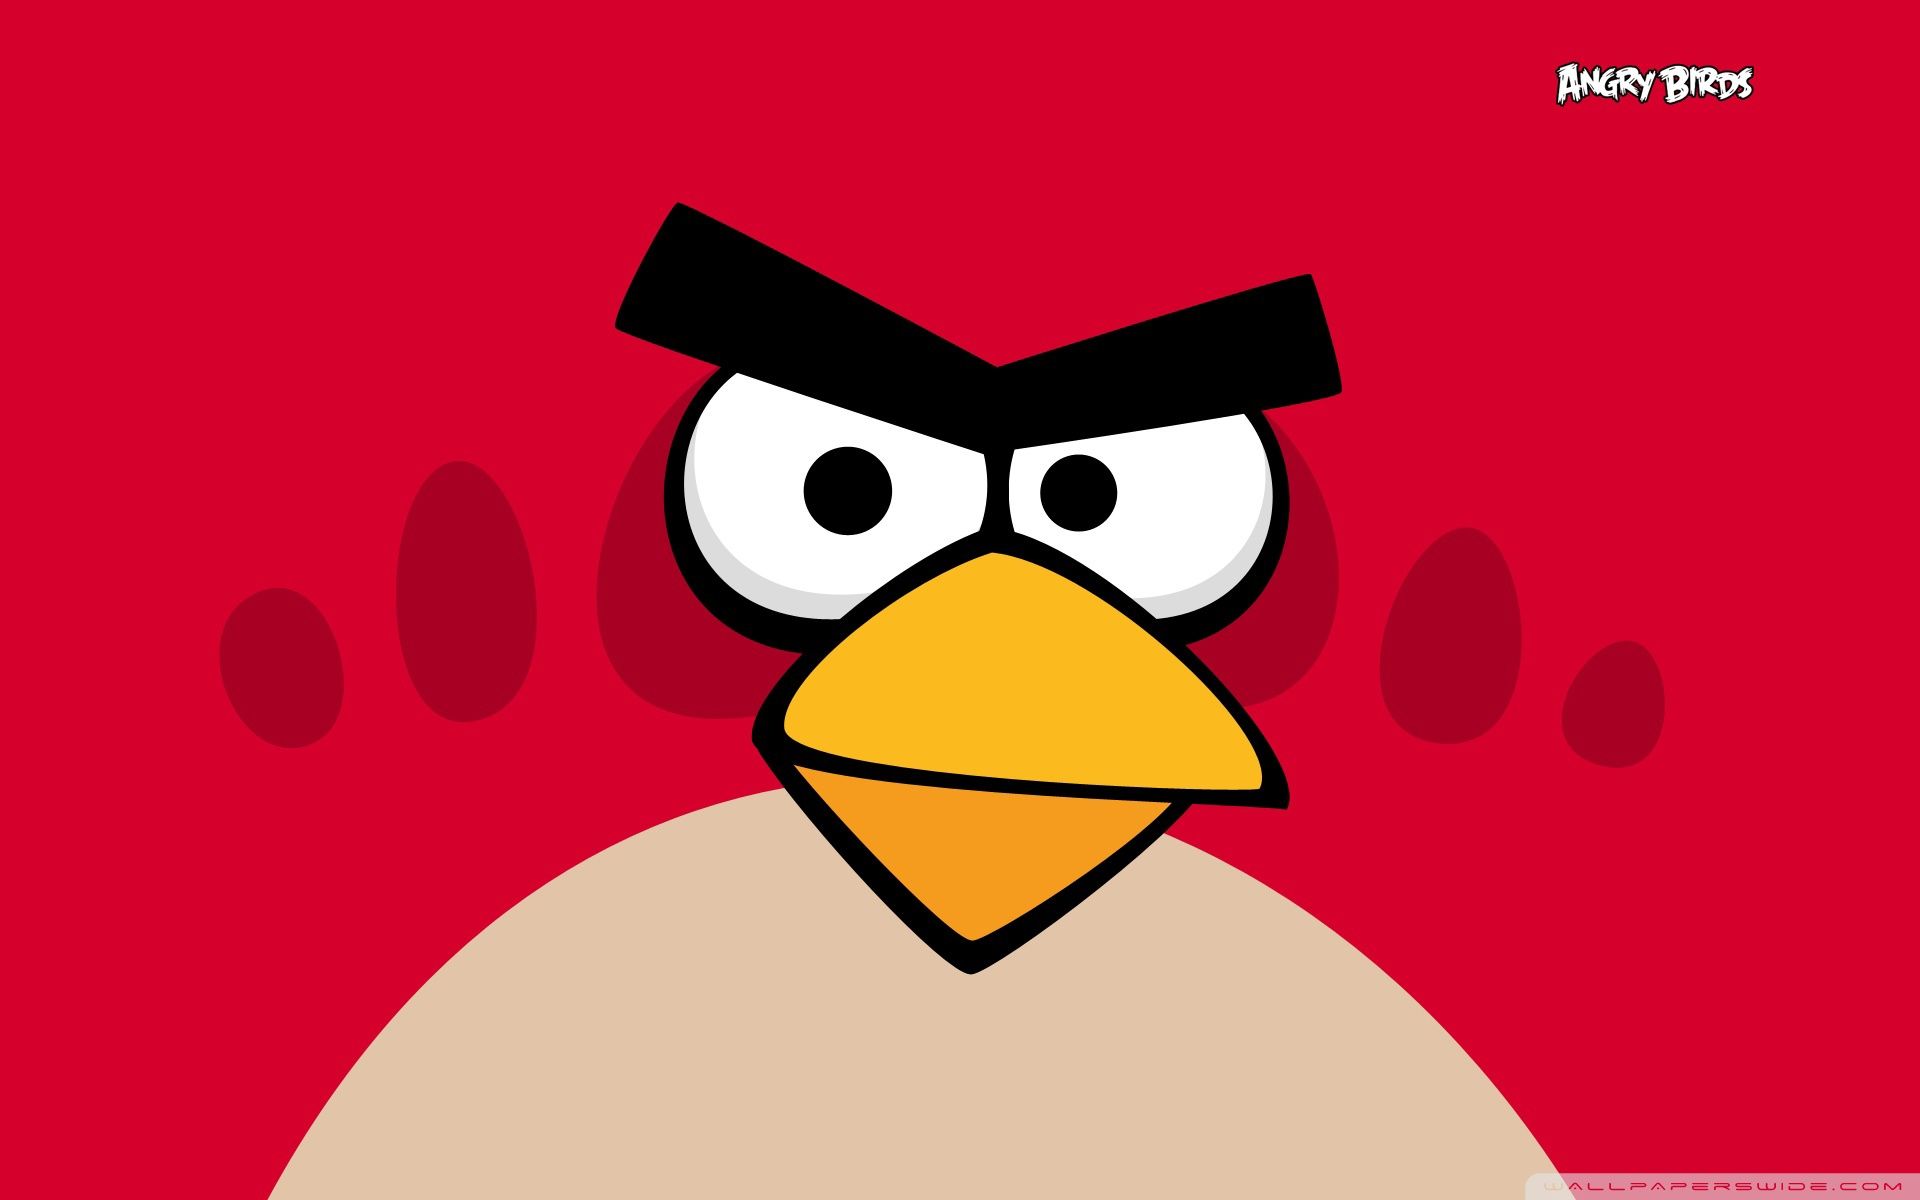 Angry Birds Bird Ultra HD Desktop Background Wallpaper for 4K UHD TV, Tablet